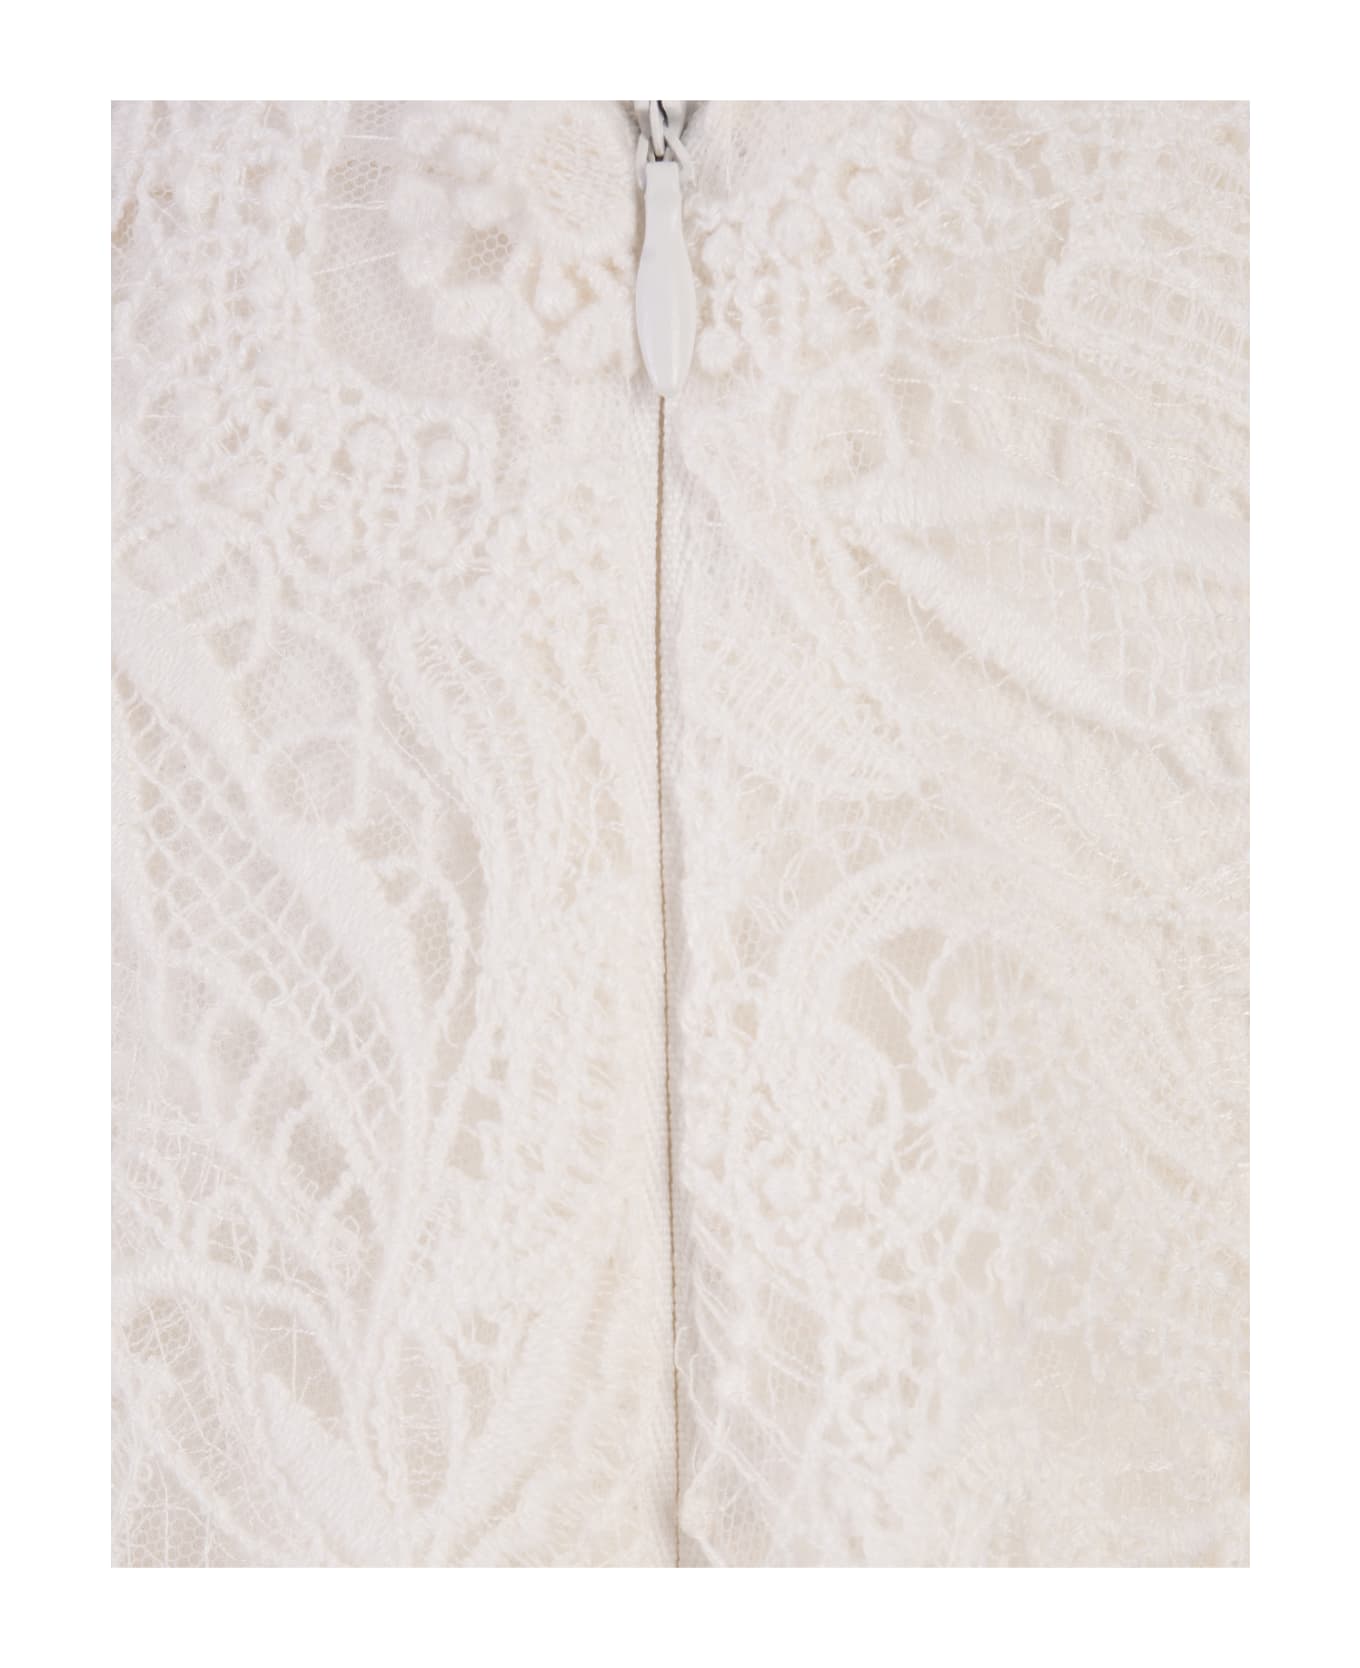 Ermanno Scervino Short A-line Skirt In White Lace - White